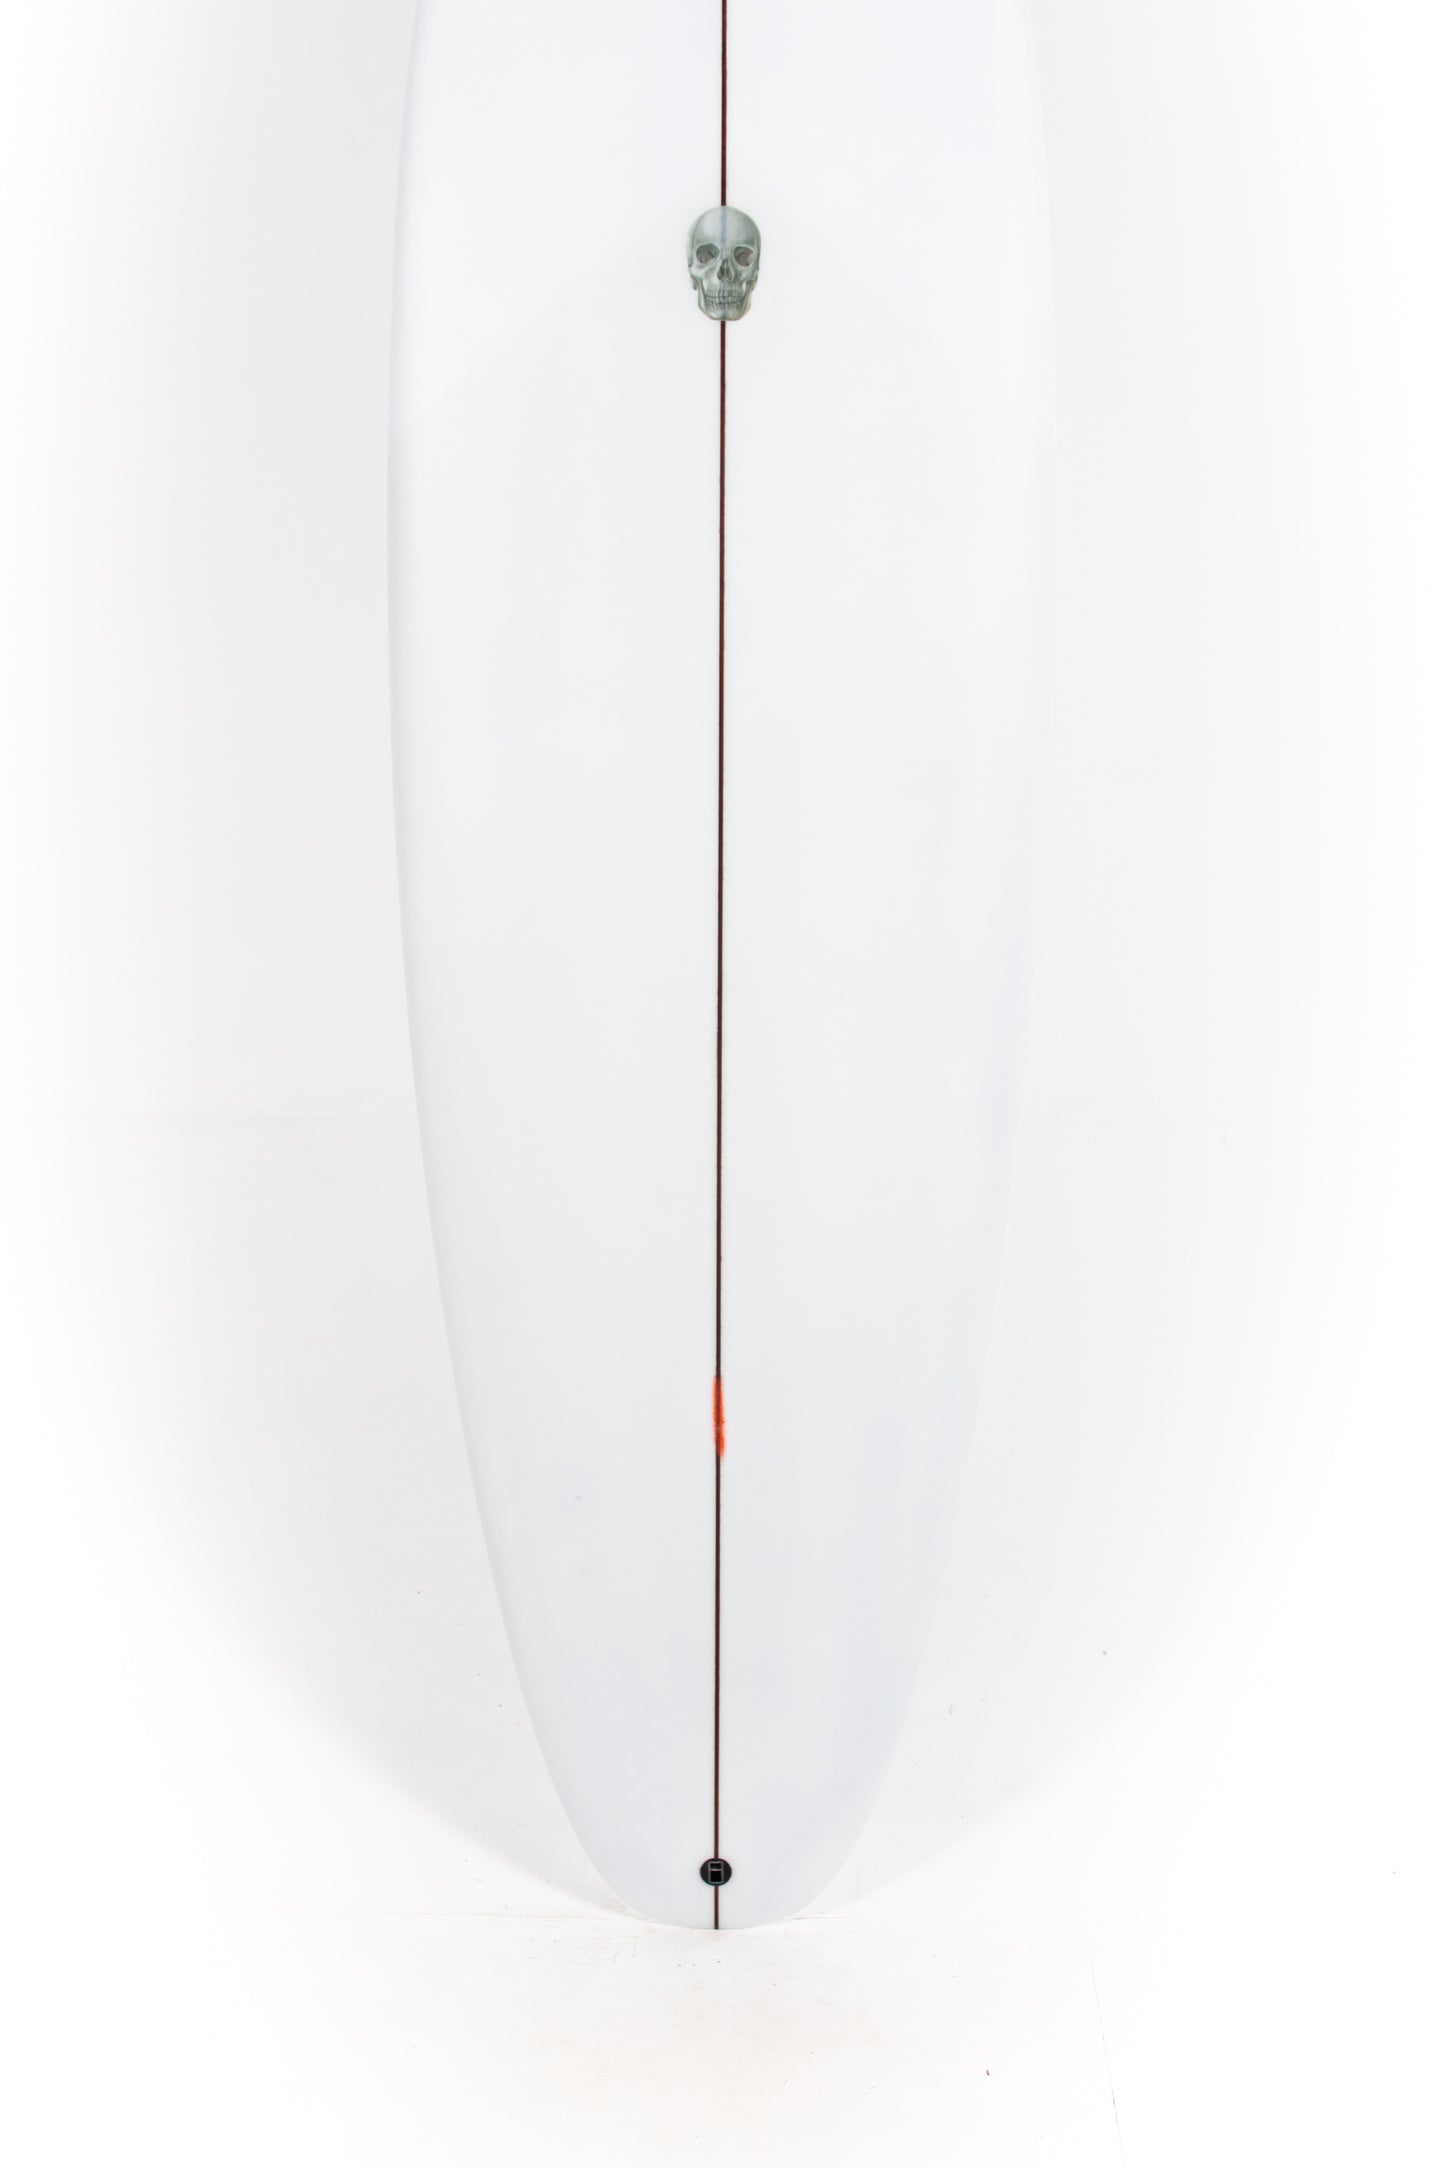 
                  
                    Pukas Surf Shop - Christenson Surfboards - TWIN TRACKER - 6'6" x 21 x 2 5/8 - CX03324
                  
                